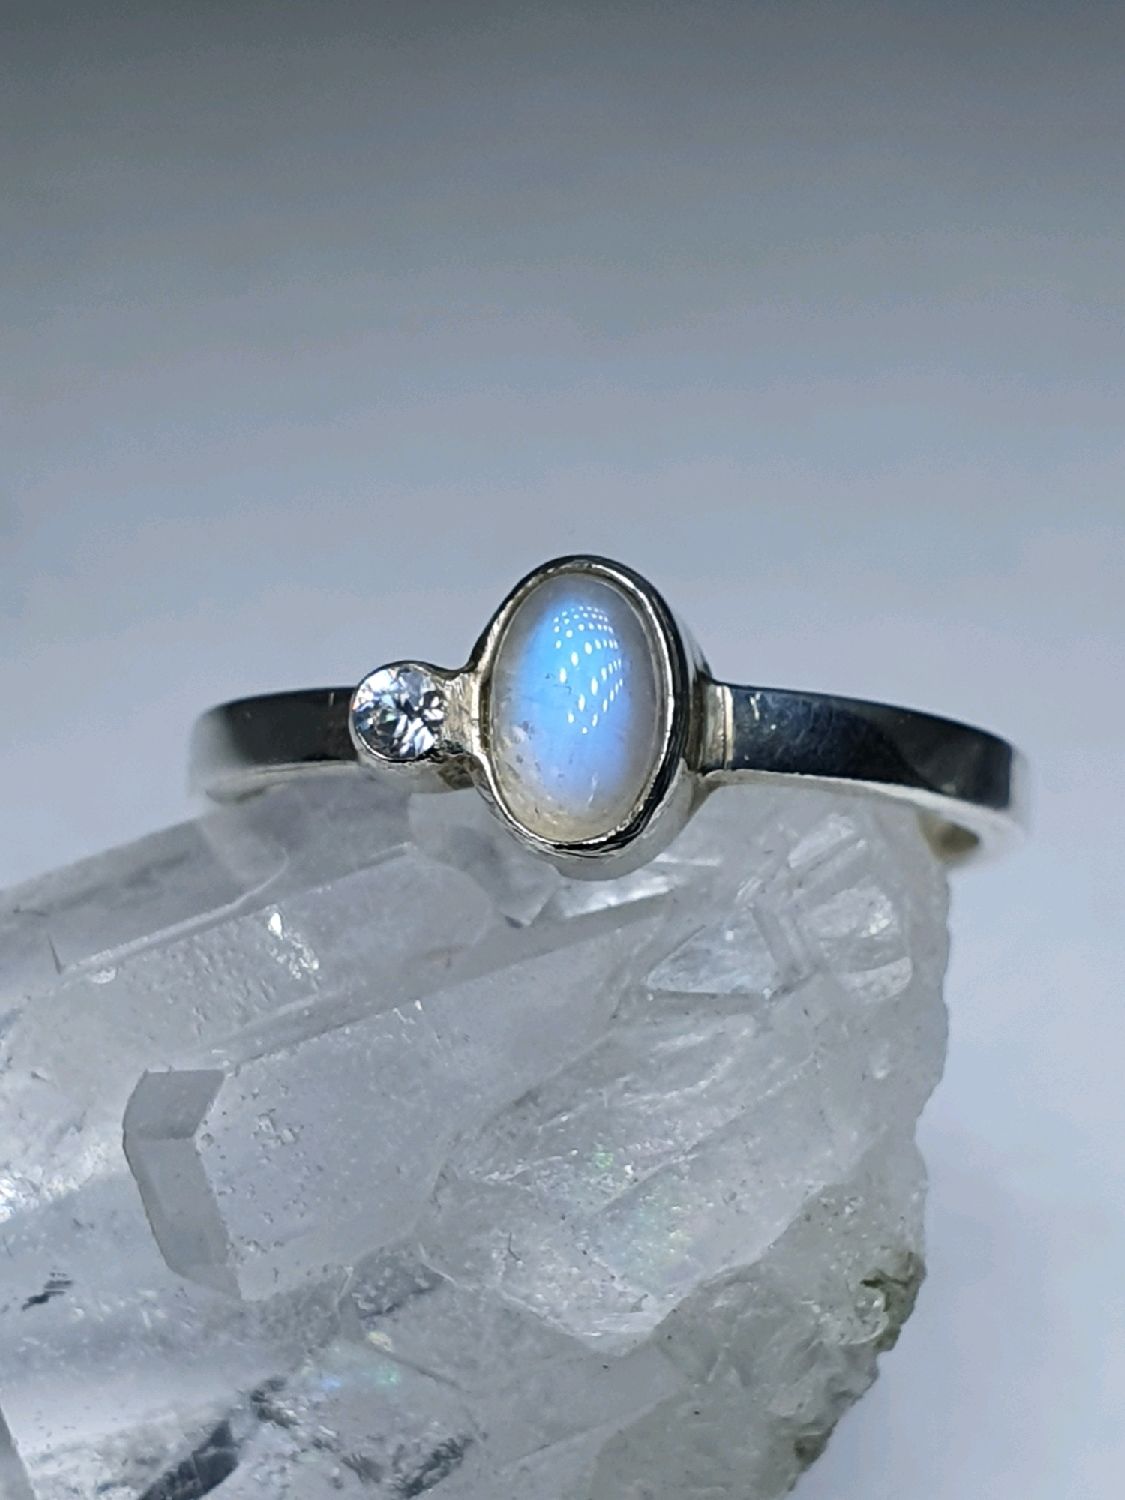 Купленный товар серебряное кольцо. Кольцо ММК 1409ms 746 ДЕНО серебро с лунным камнем. Кольцо серебро кго618 с лунным камнем. Кольцо с лунным камнем в серебре. Кольцо из натурального лунного камня.